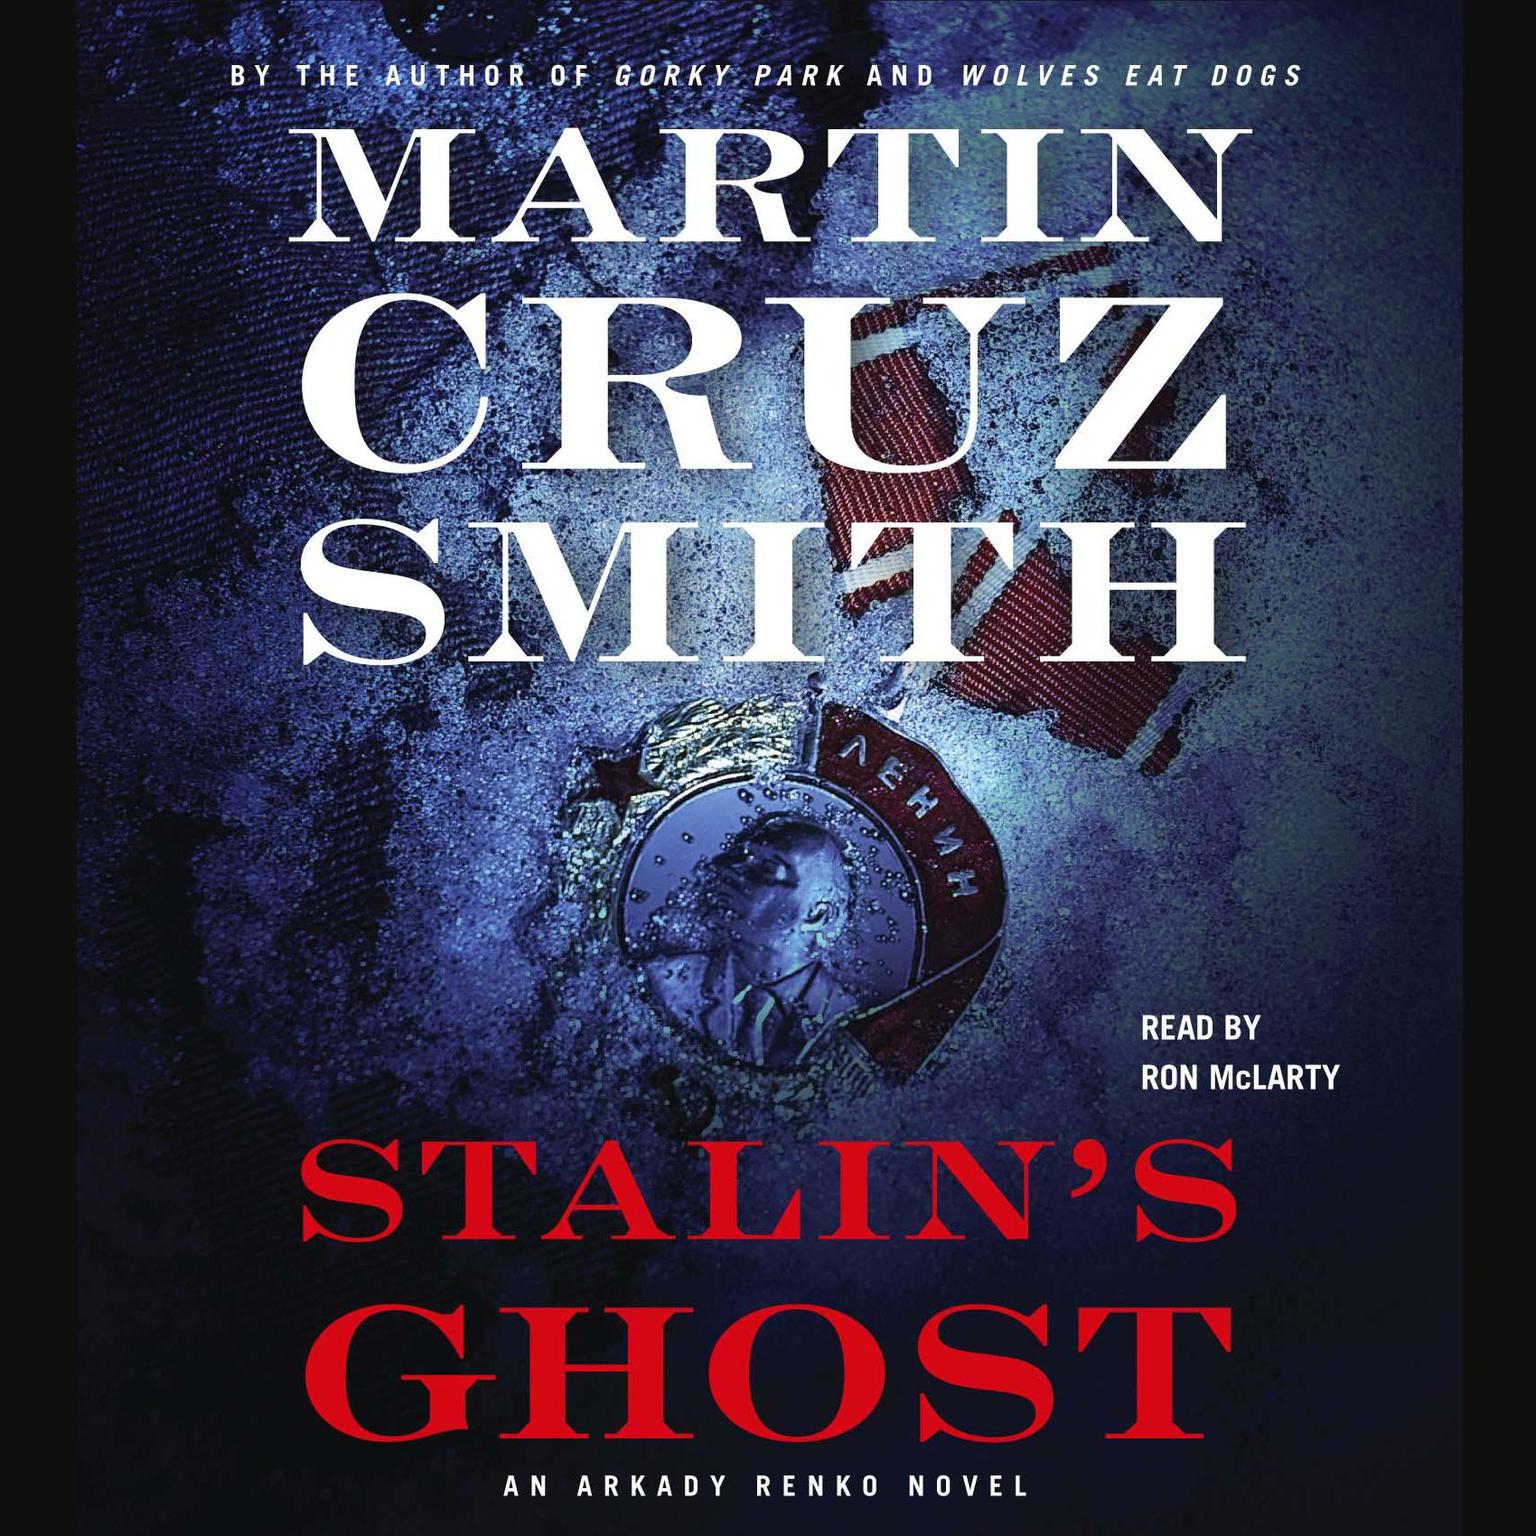 Stalins Ghost (Abridged): An Arkady Renko Novel Audiobook, by Martin Cruz Smith